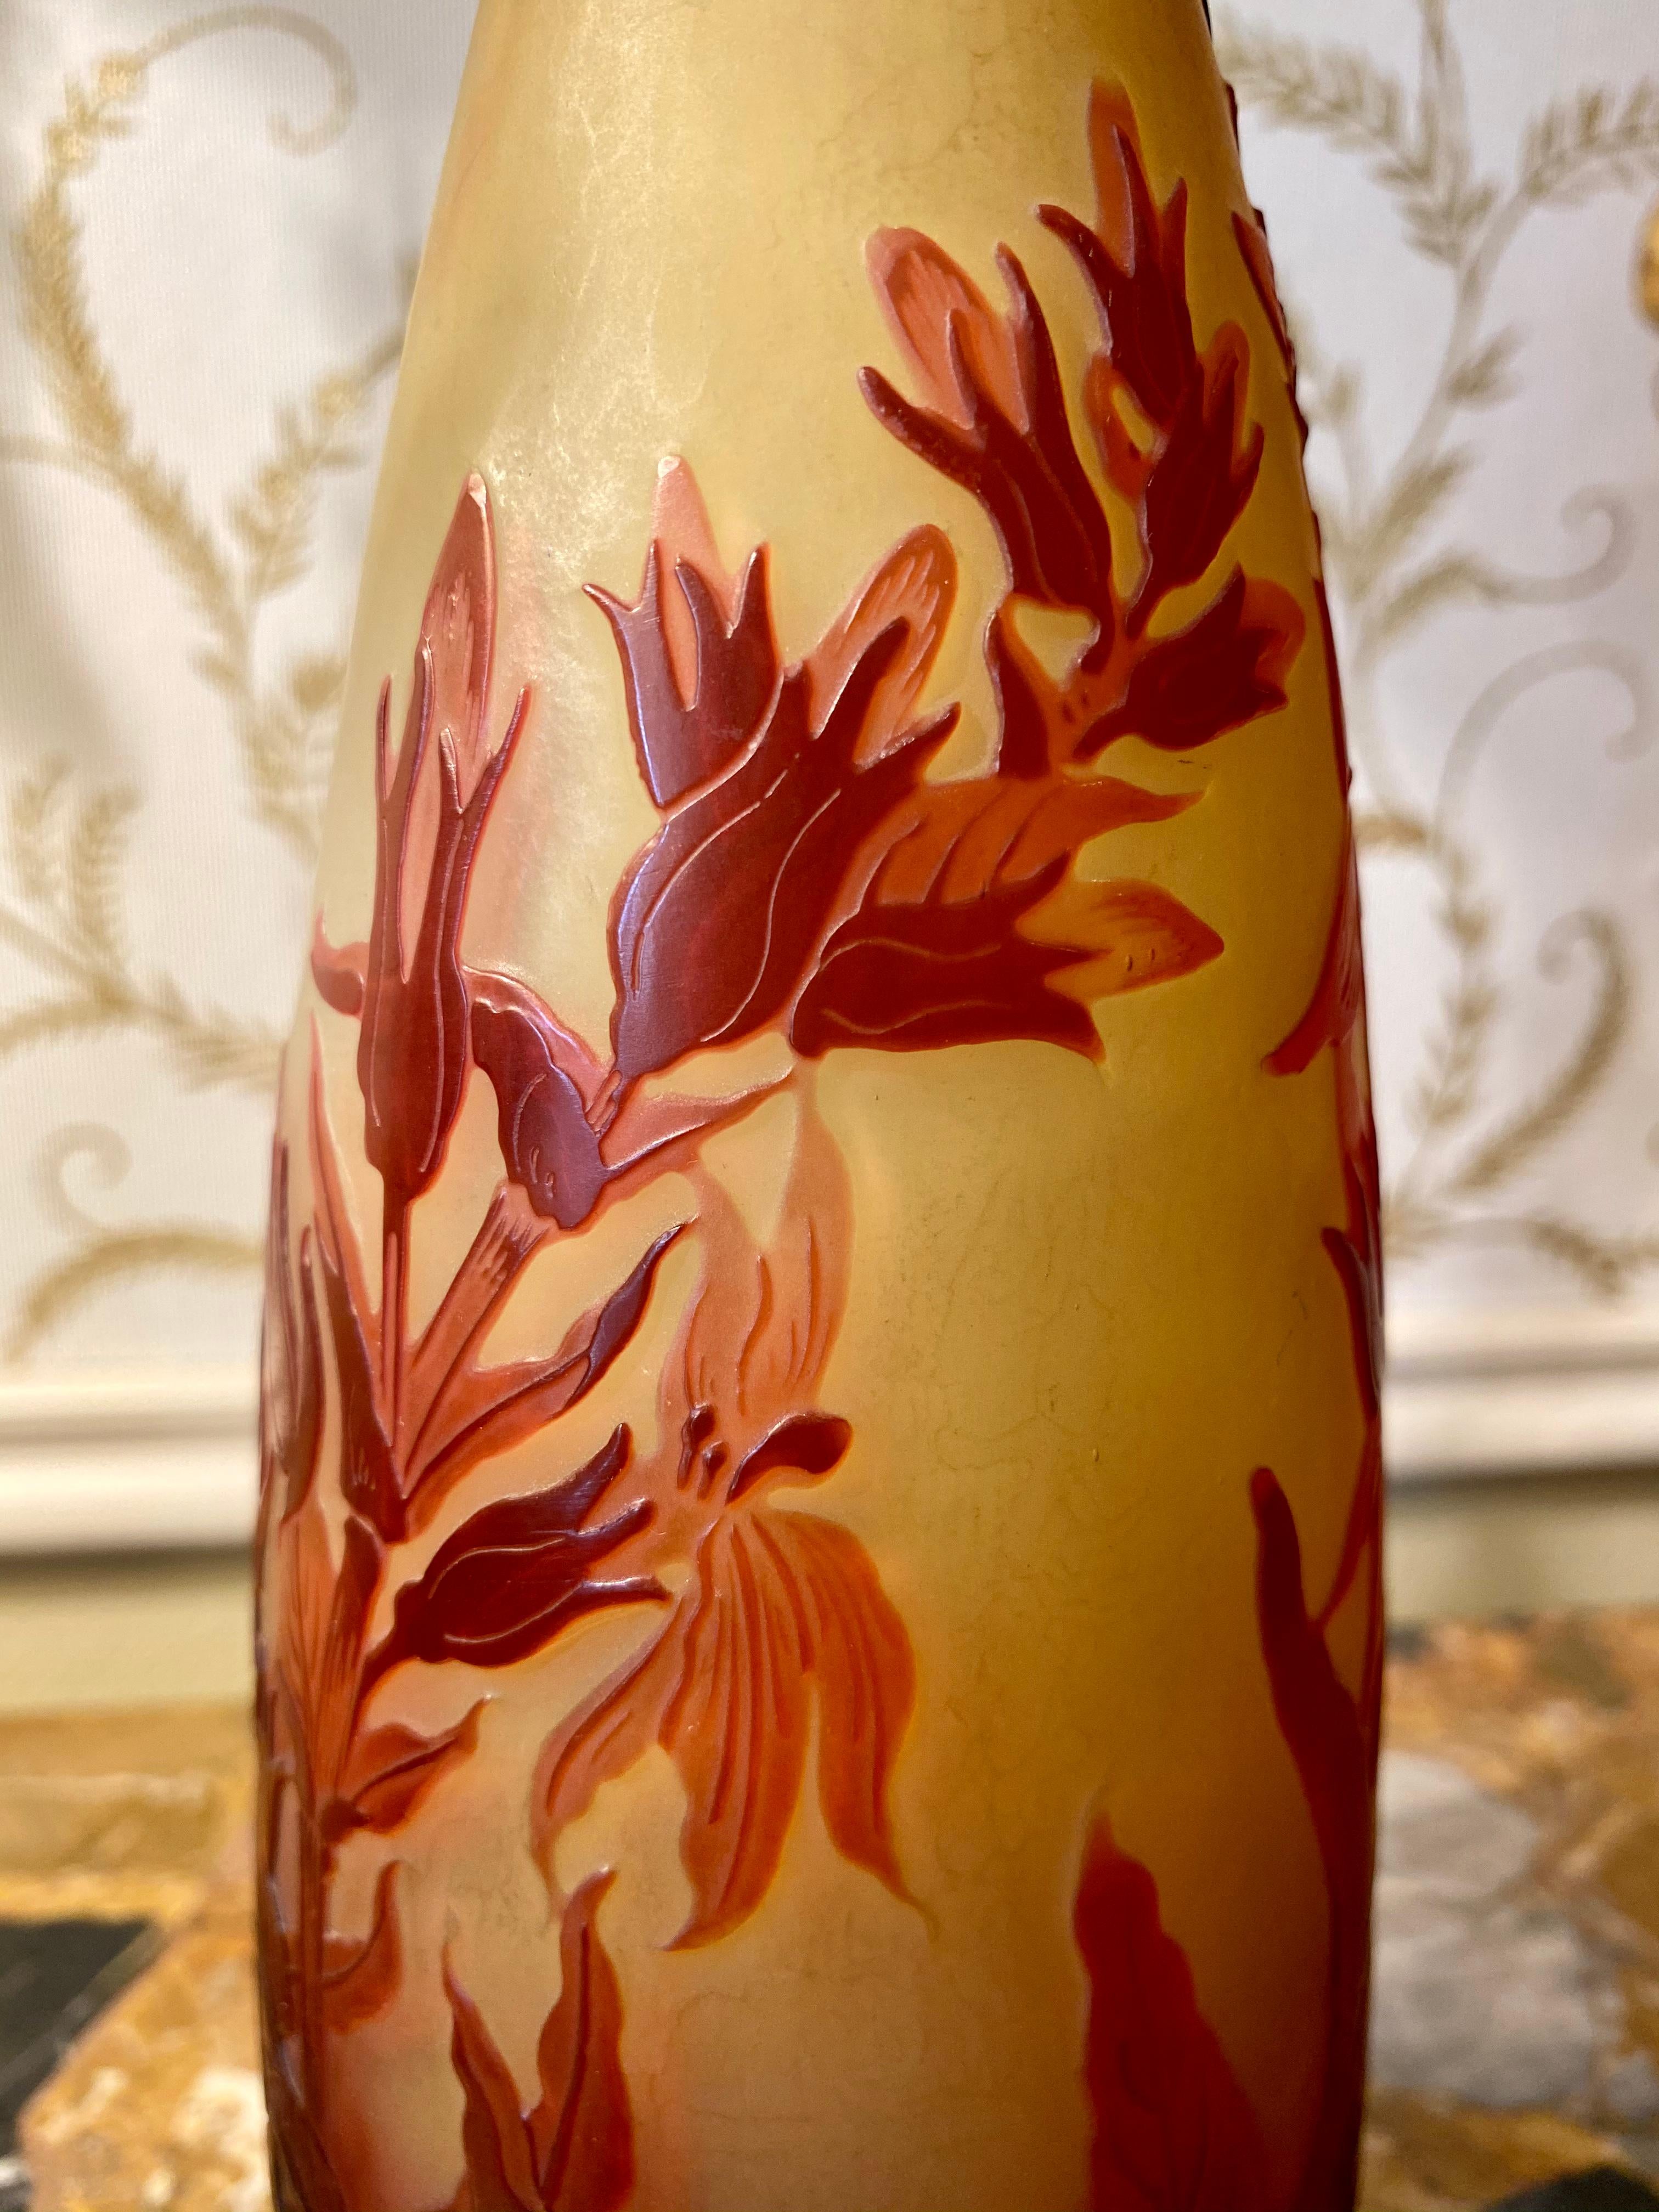 Emile Galle, Art Nouveau Style Elongated Piriform Vase with Irises 20th Century For Sale 3